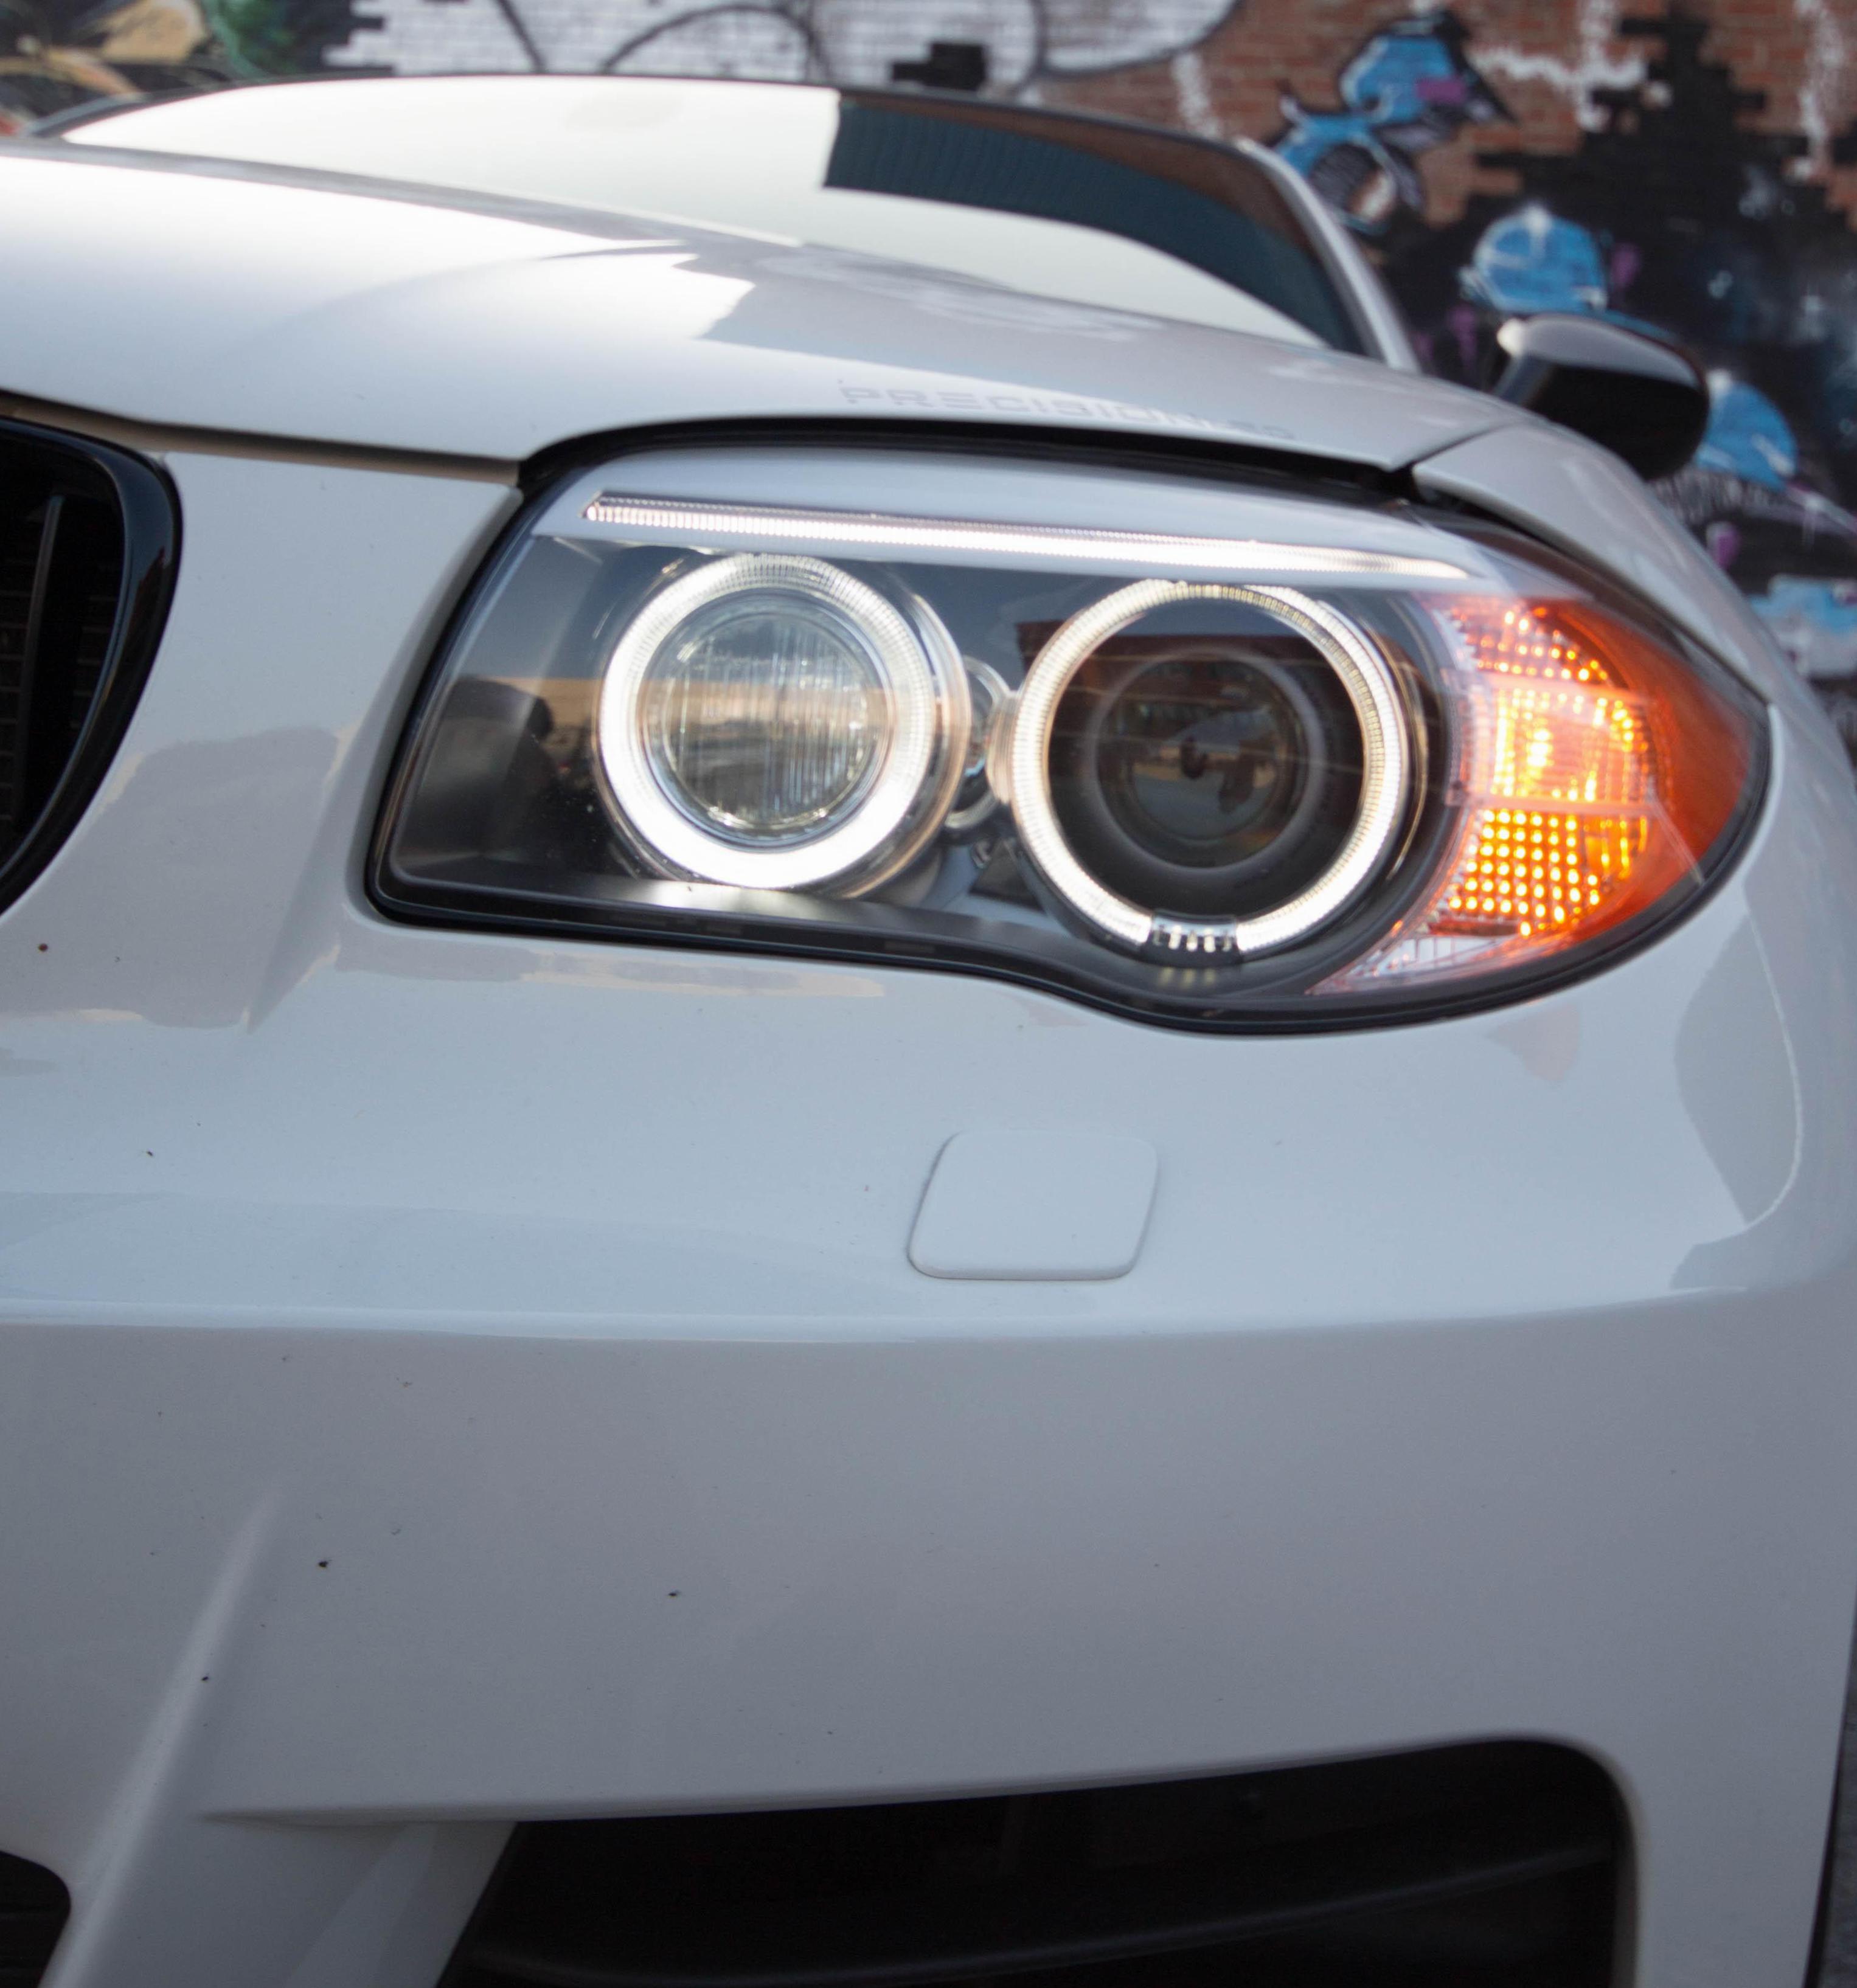 BMW 1 Series Coupe (E82) review 2014